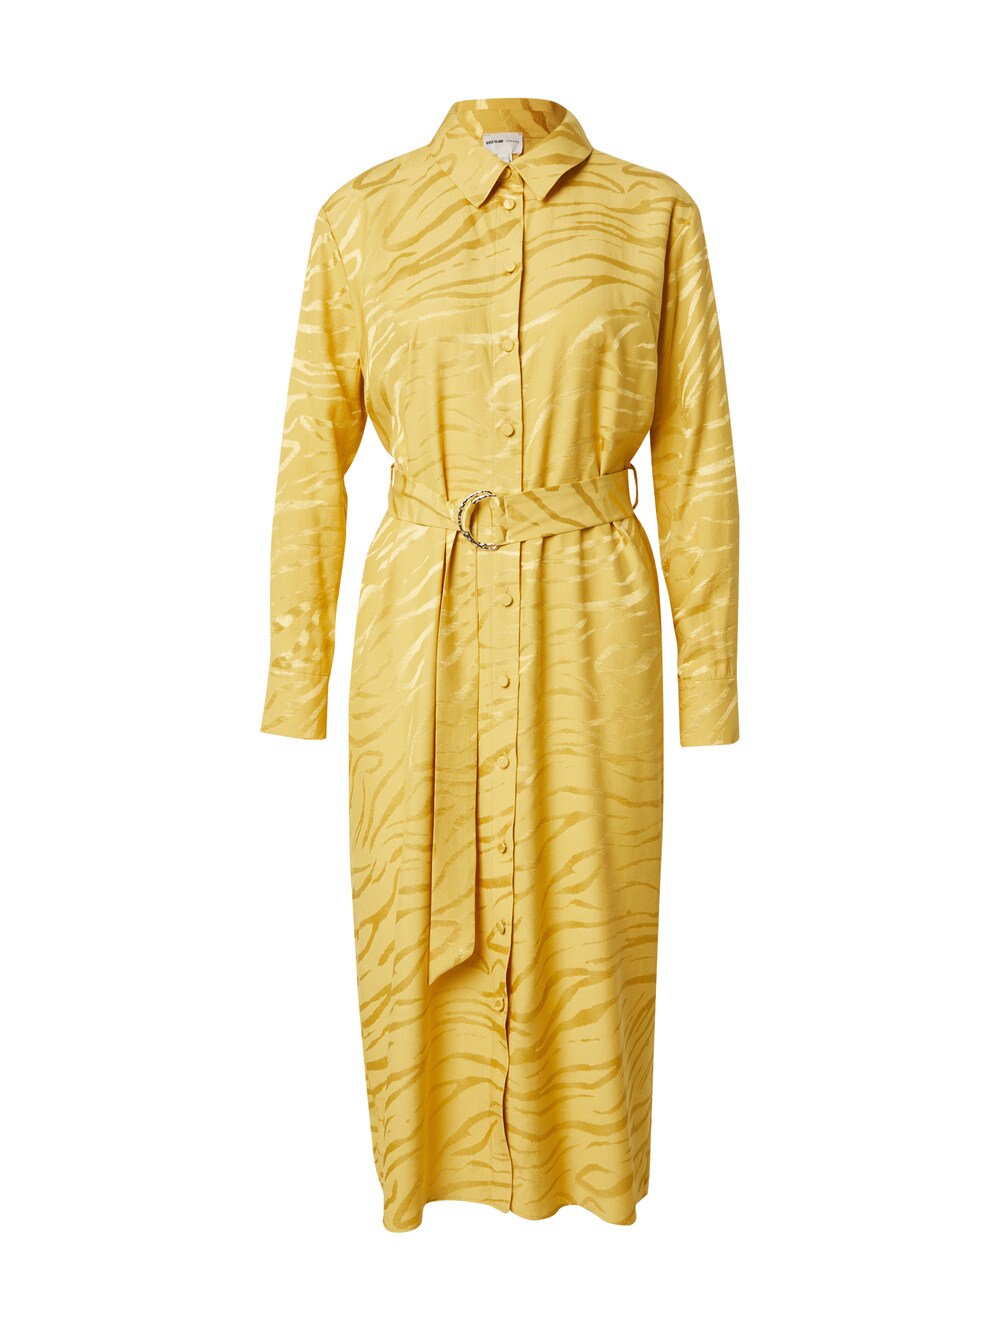 Рубашка-платье River Island, желтое/желтое золото